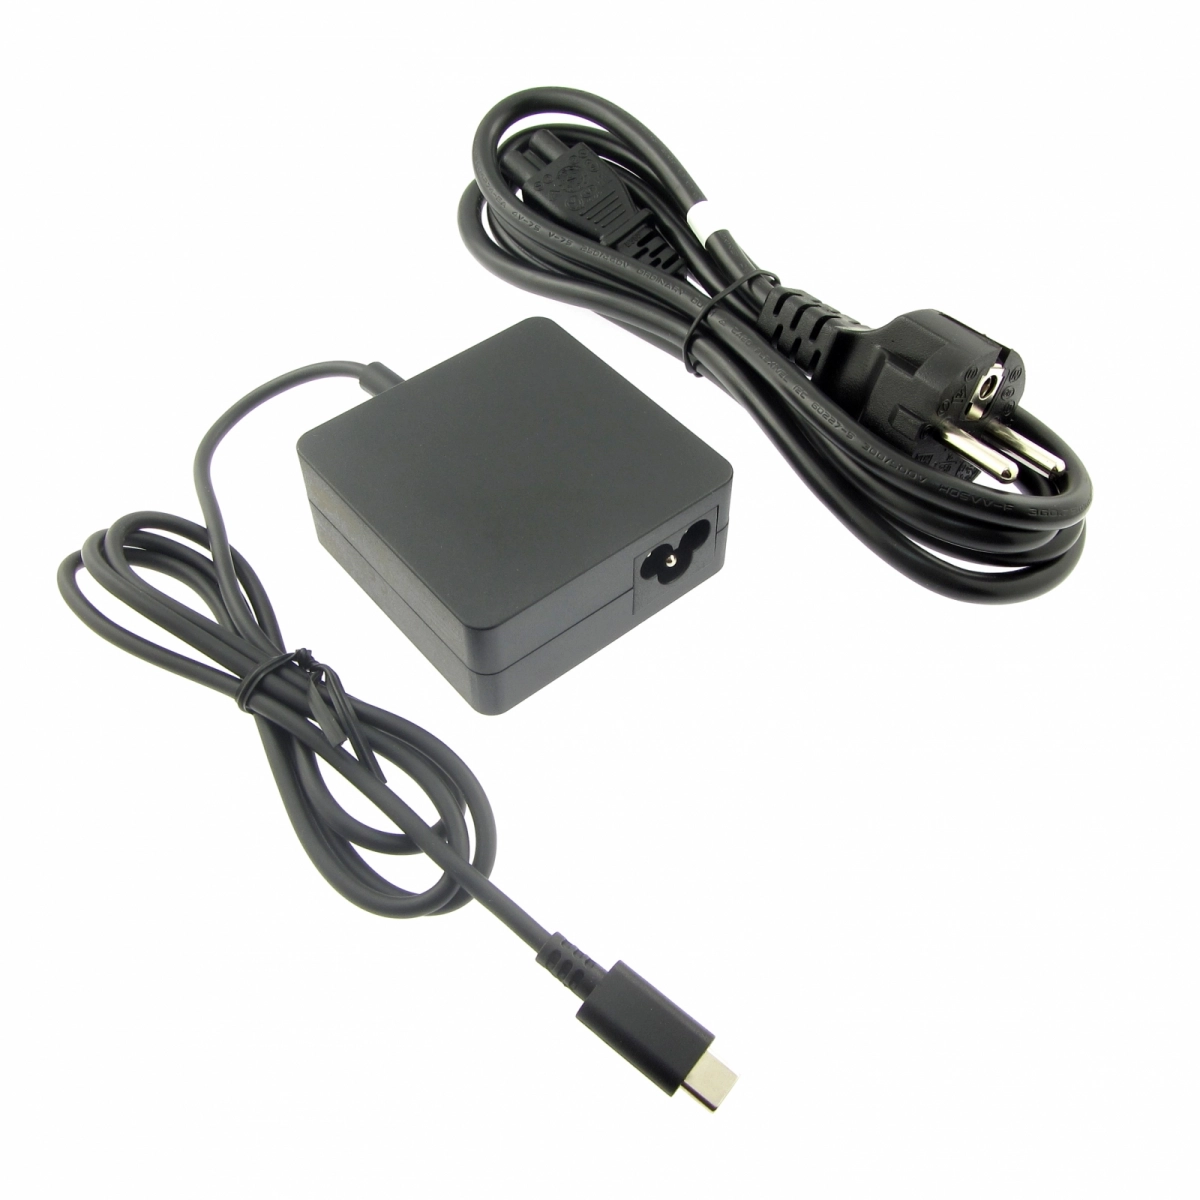 FSP Original Netzteil Typ 9NA0606000, 20V, 3.0A, Stecker USB-C, EU-Version